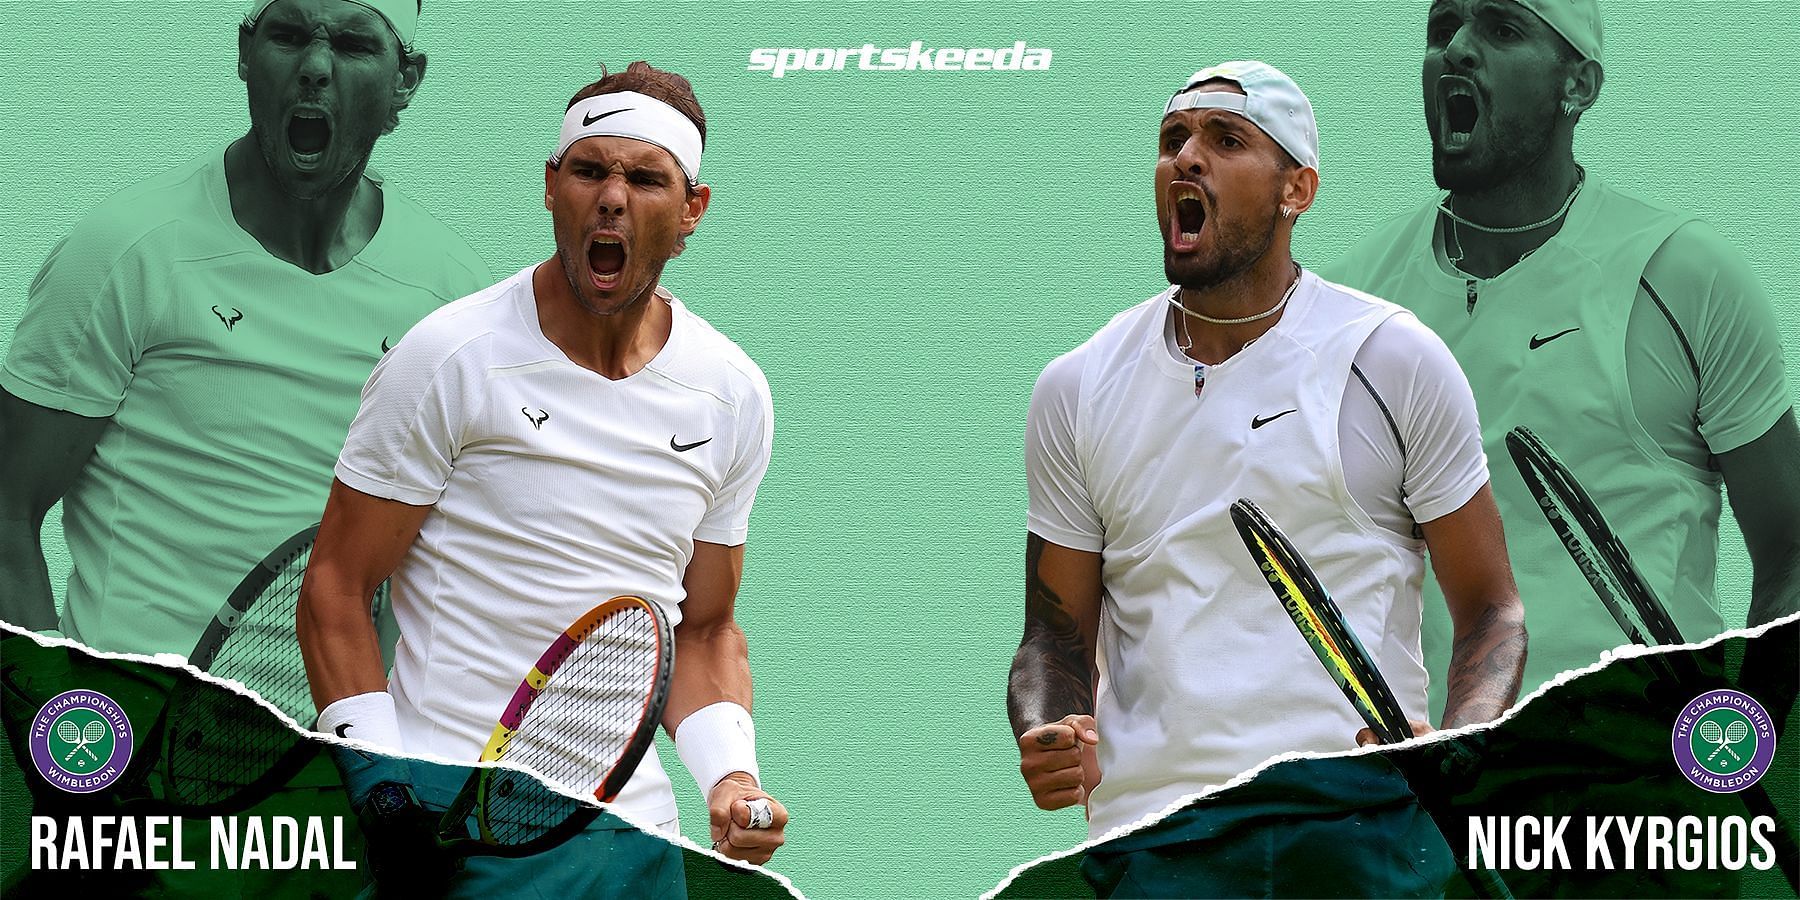 Rafael Nadal will take on Nick Kyrgios in the semifinals of Wimbledon